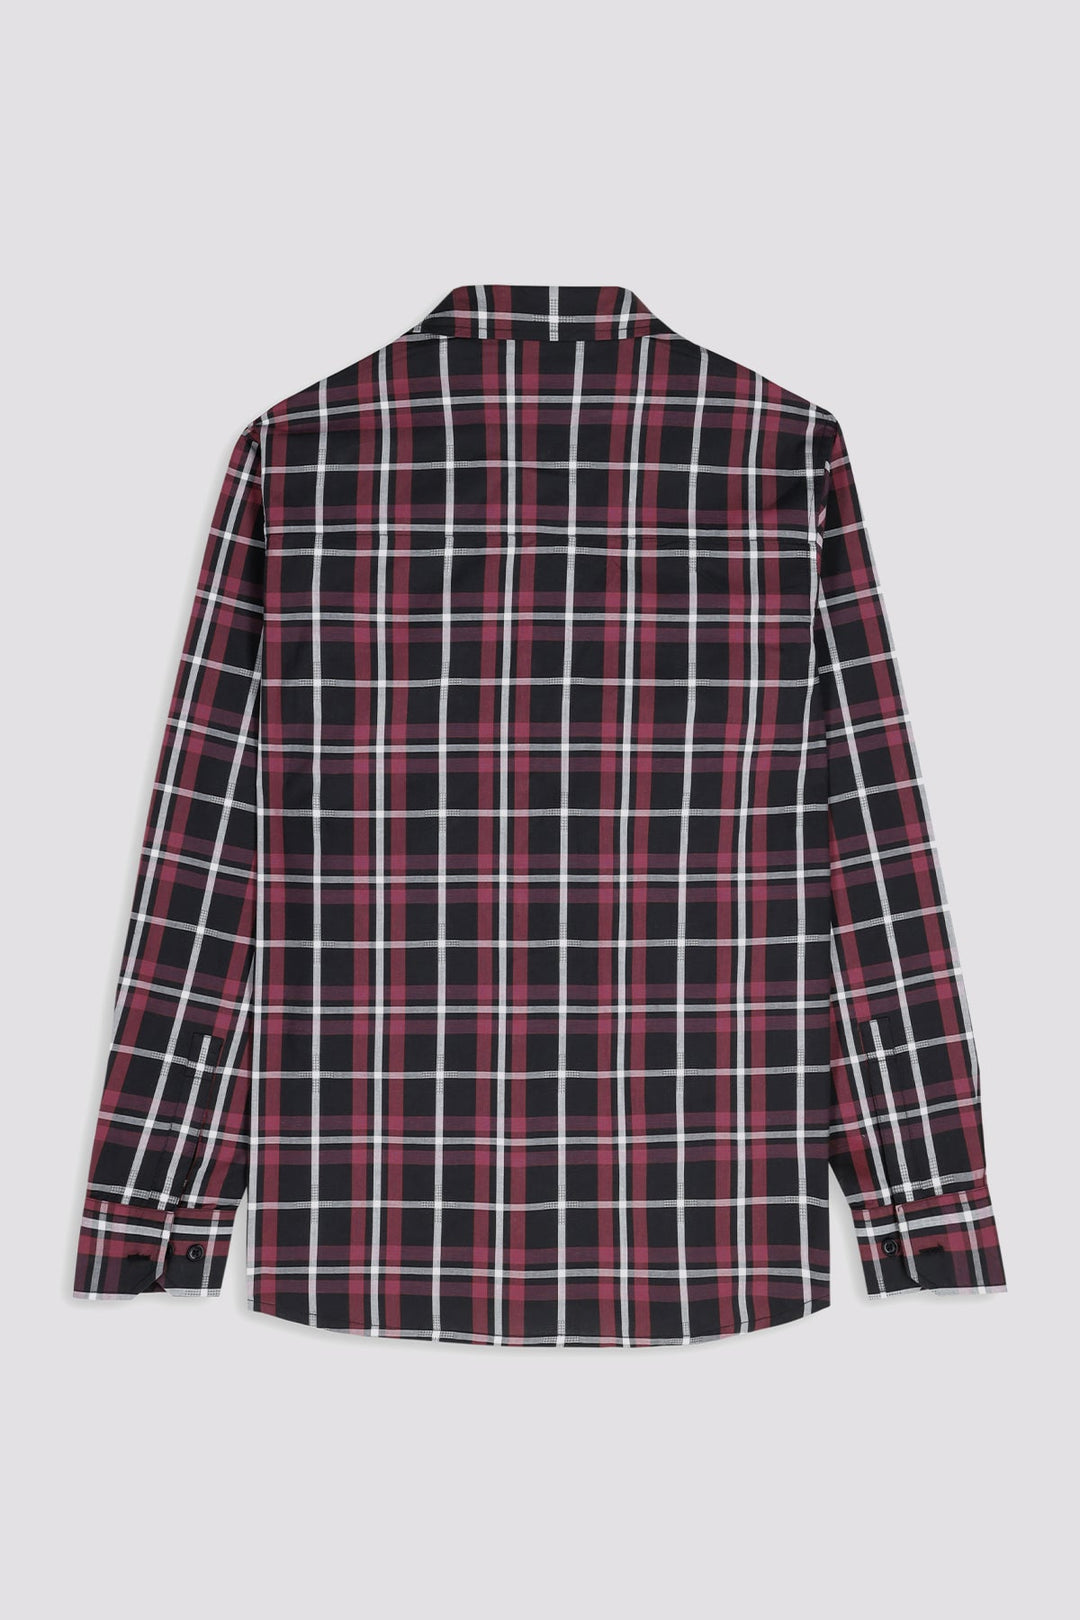 Black & Maroon Checkered Shirt - W23 - MS0078R